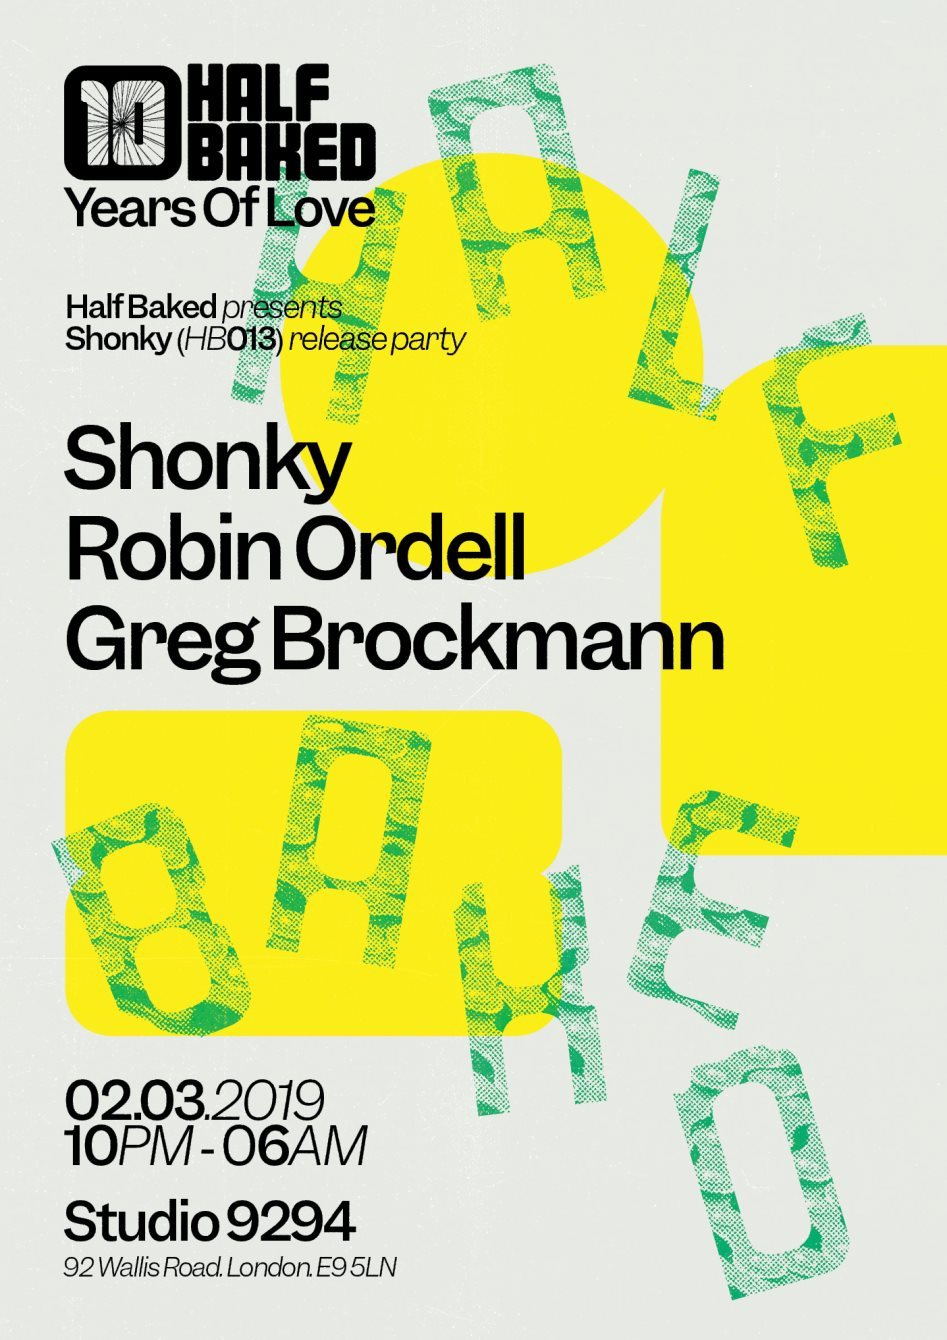 Half Baked - Shonky, Robin Ordell, Greg Brockmann - Hb013 Release Party - Flyer front